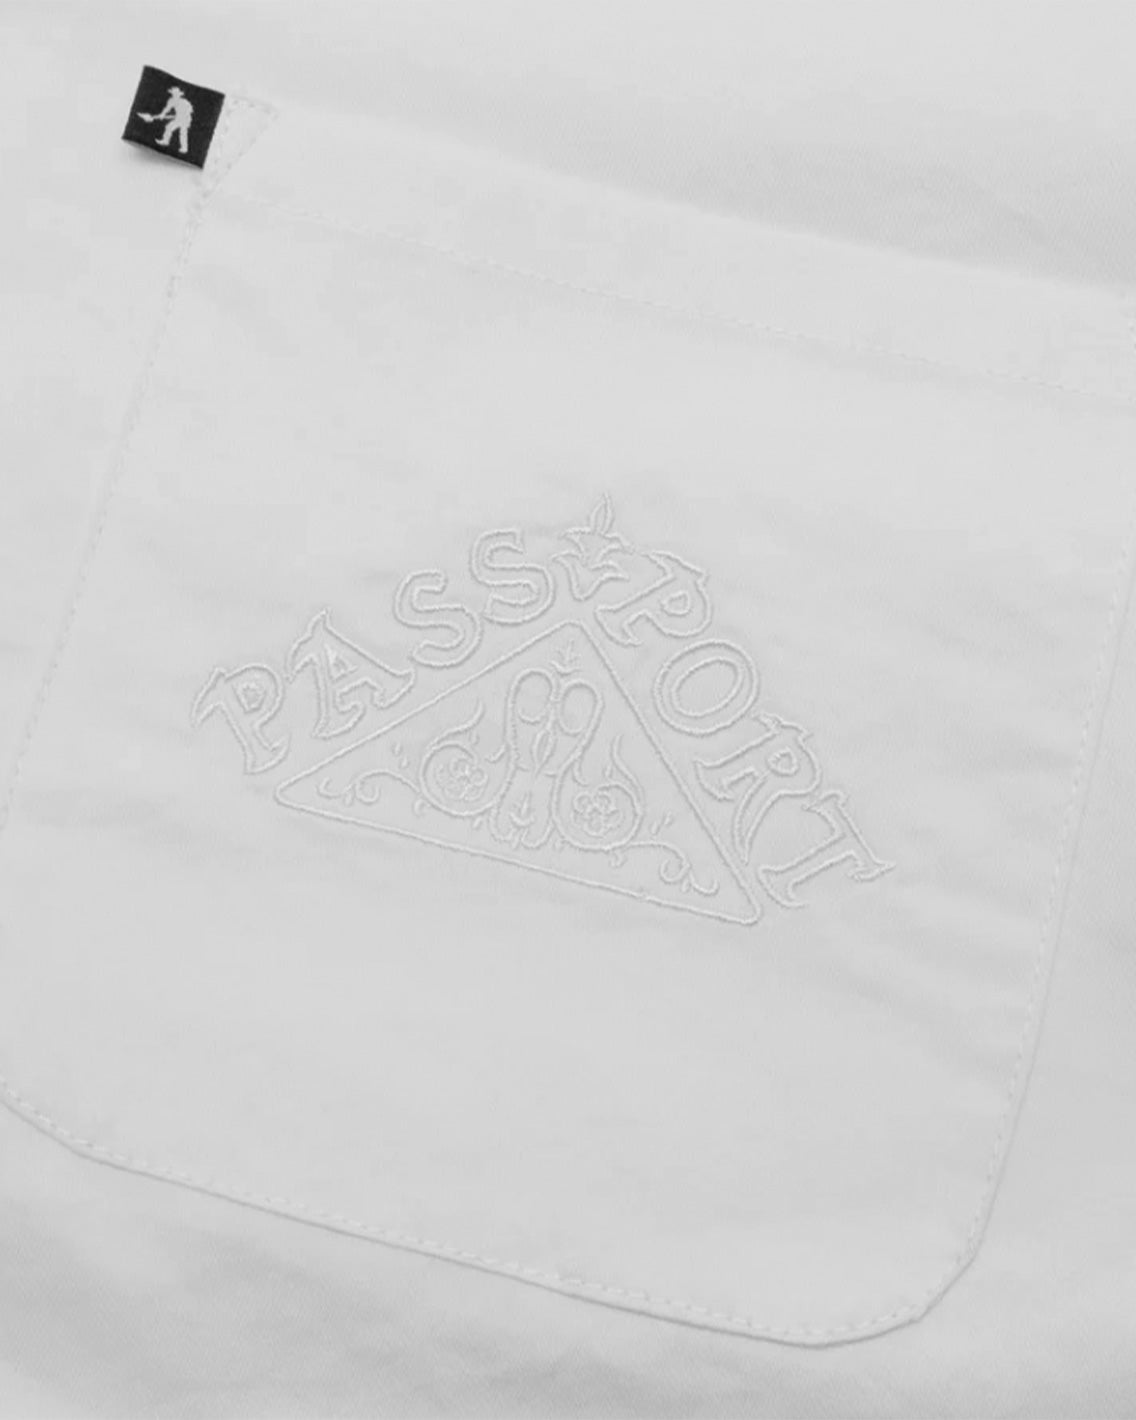 Pass~Port - Manuscript Casual Shirt - White